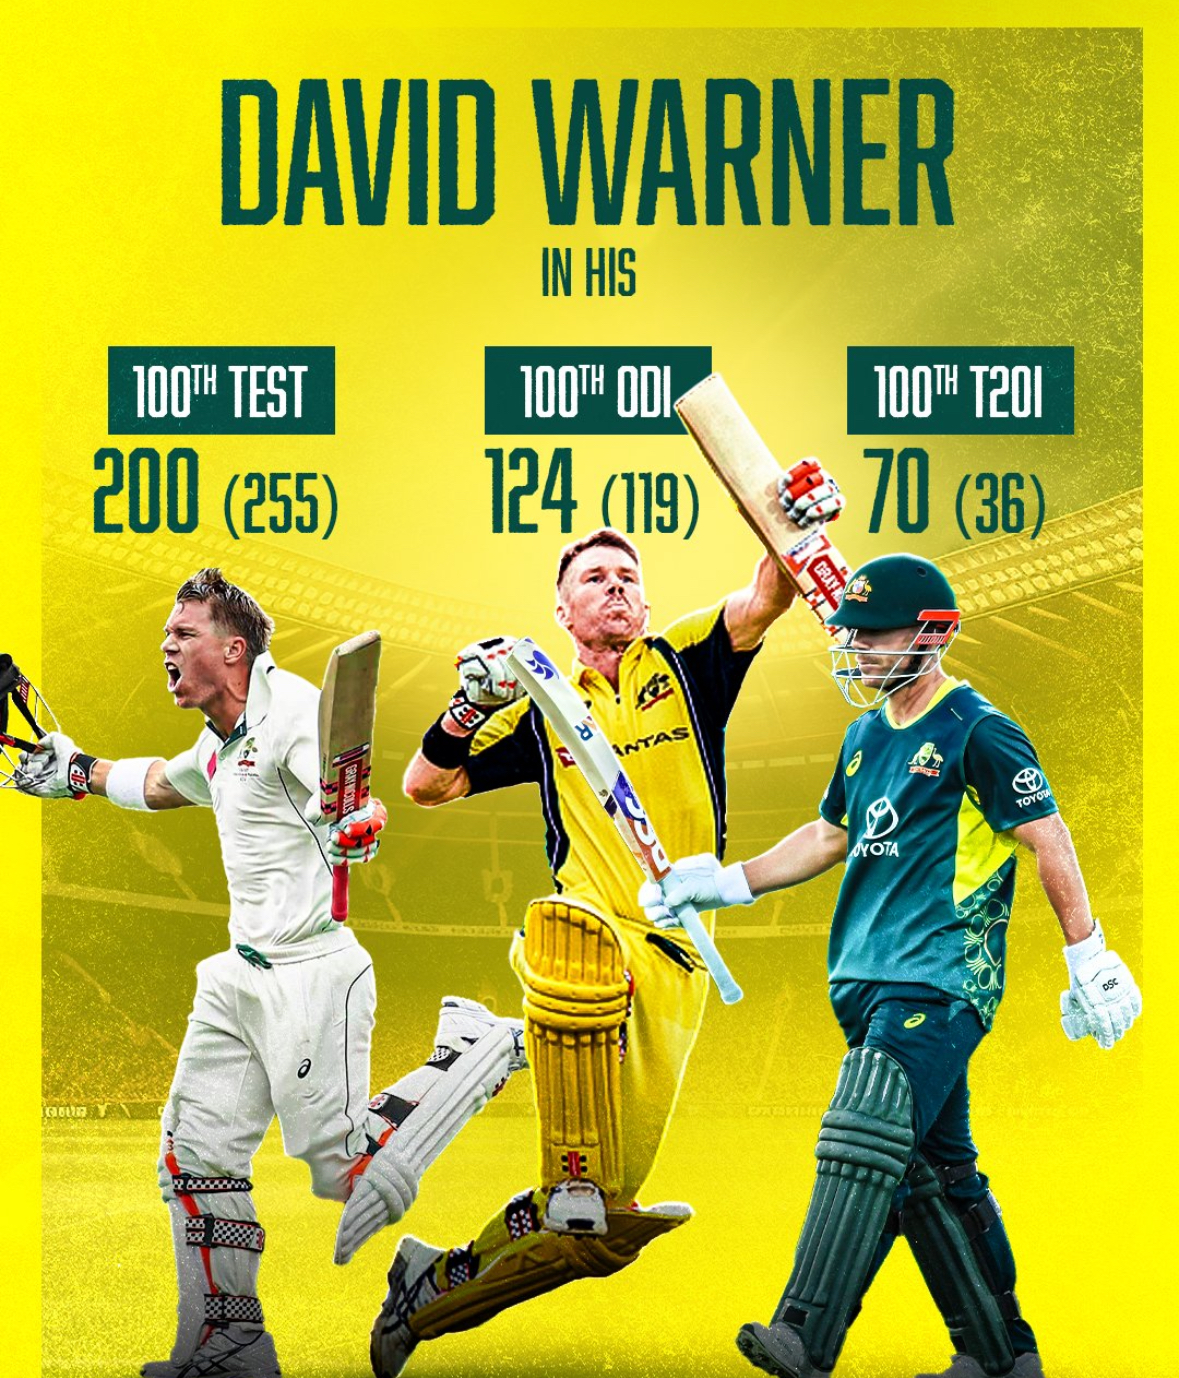 Australian legend David Warner hints at retirement after the T20 World Cup